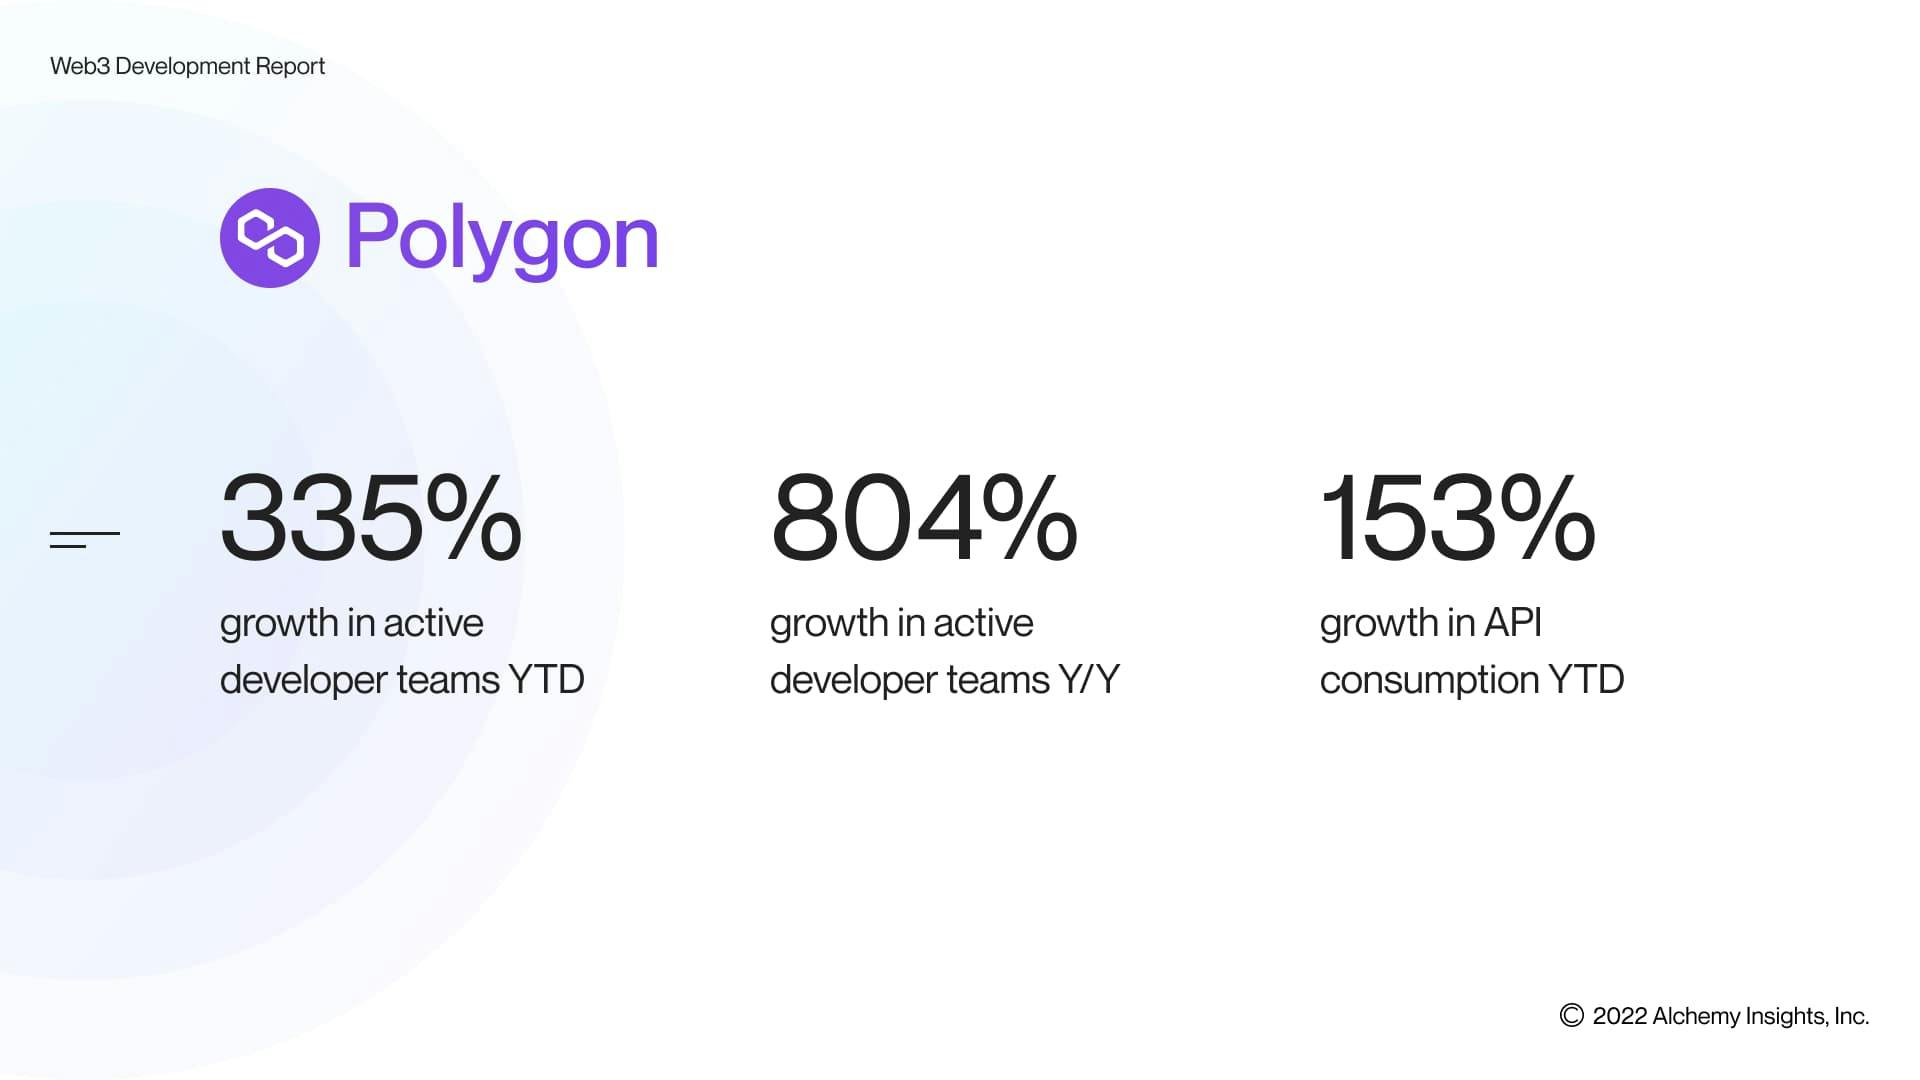 Polygon developer team growth as of Q3 2022.